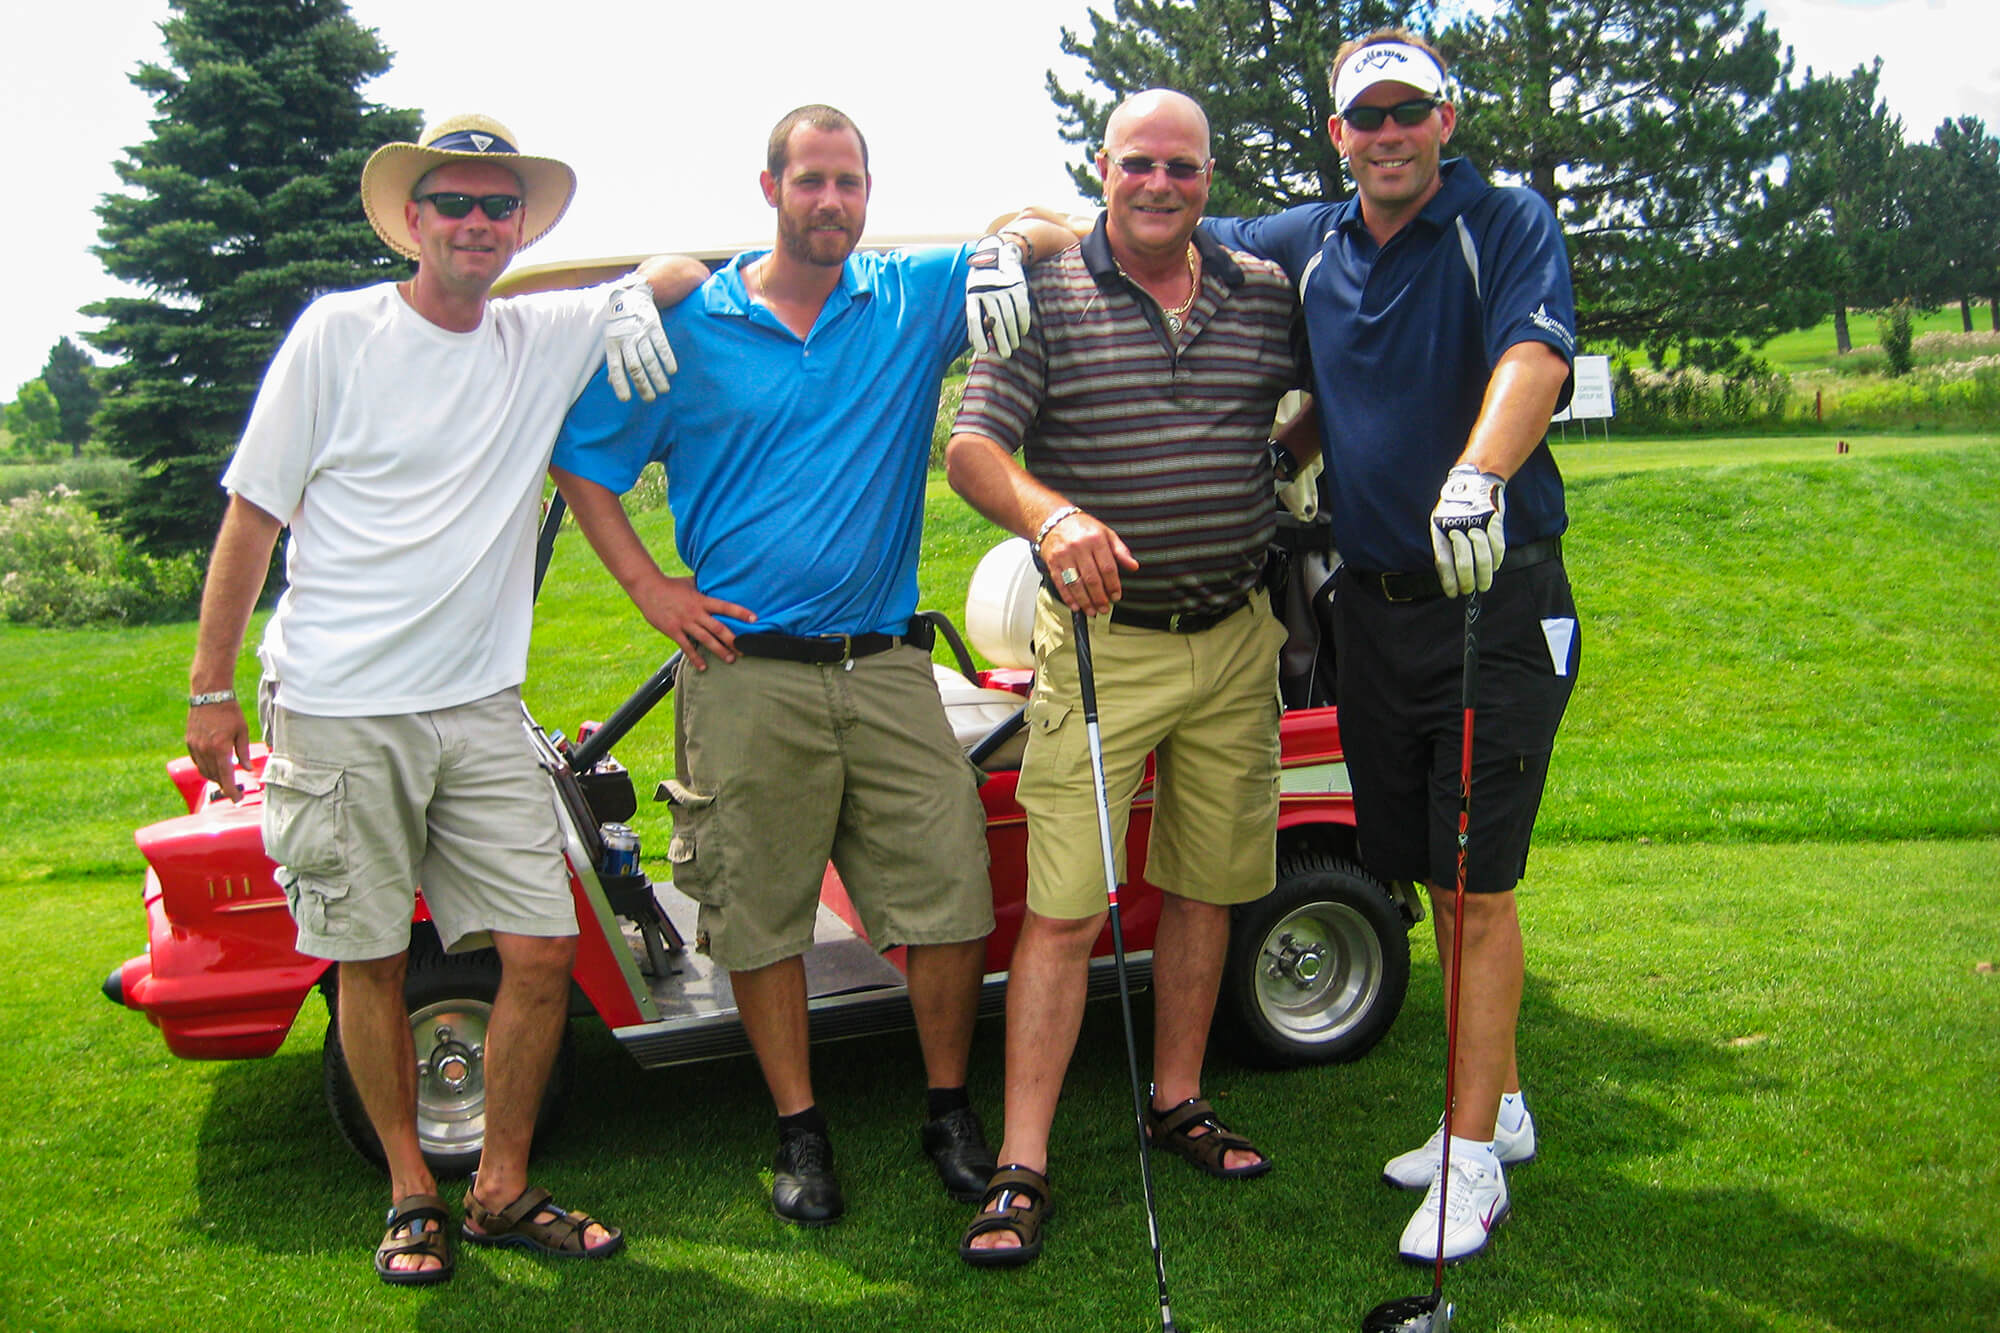 4 men on a golf course